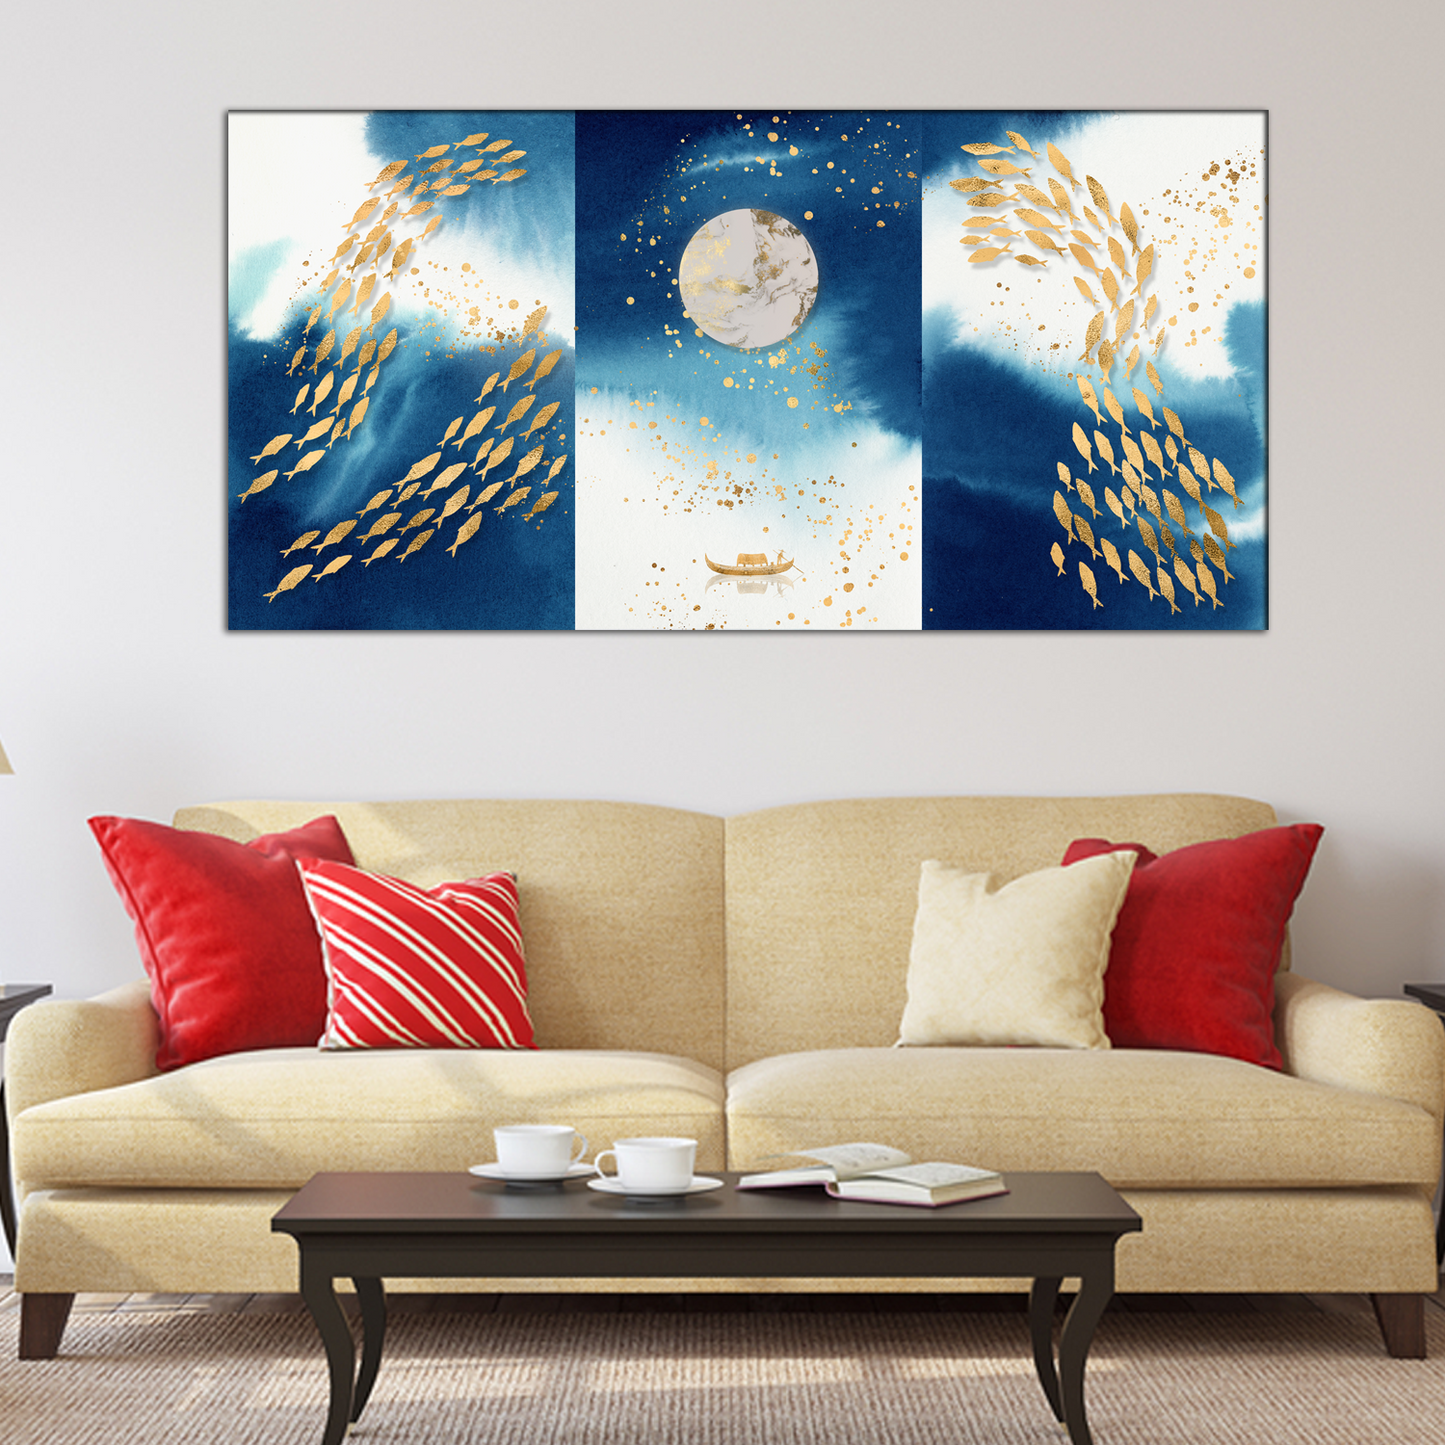 Fish Swimming, Moon and Boat Canvas Print Wall Painting